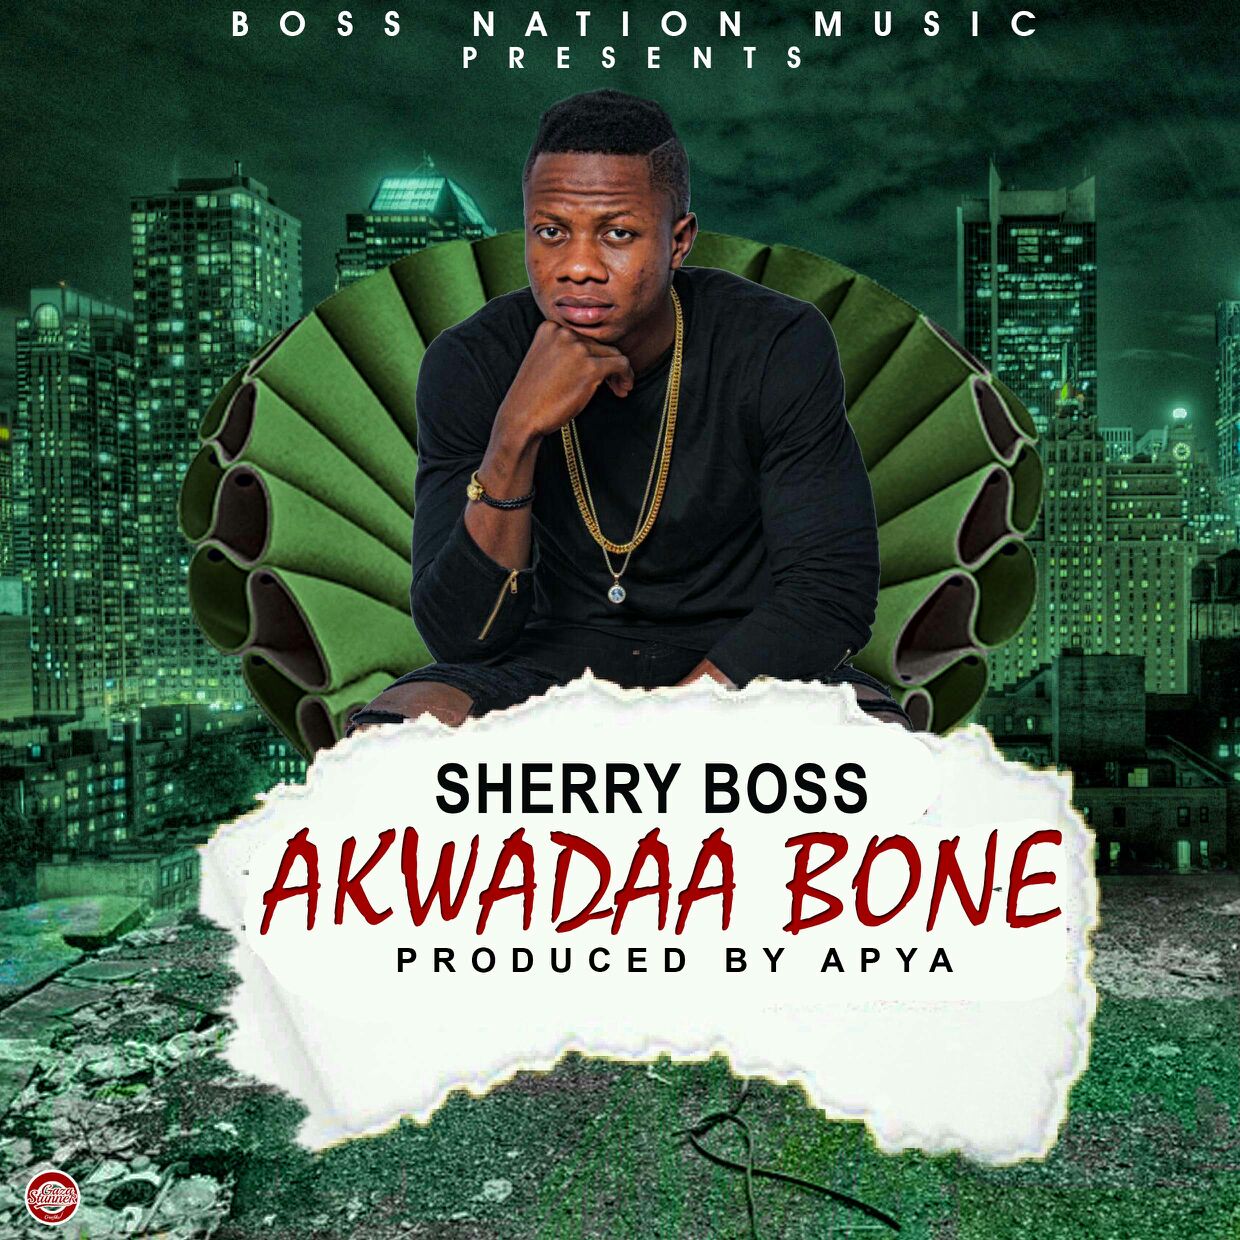 Sherry Boss Akwadaabone Prod